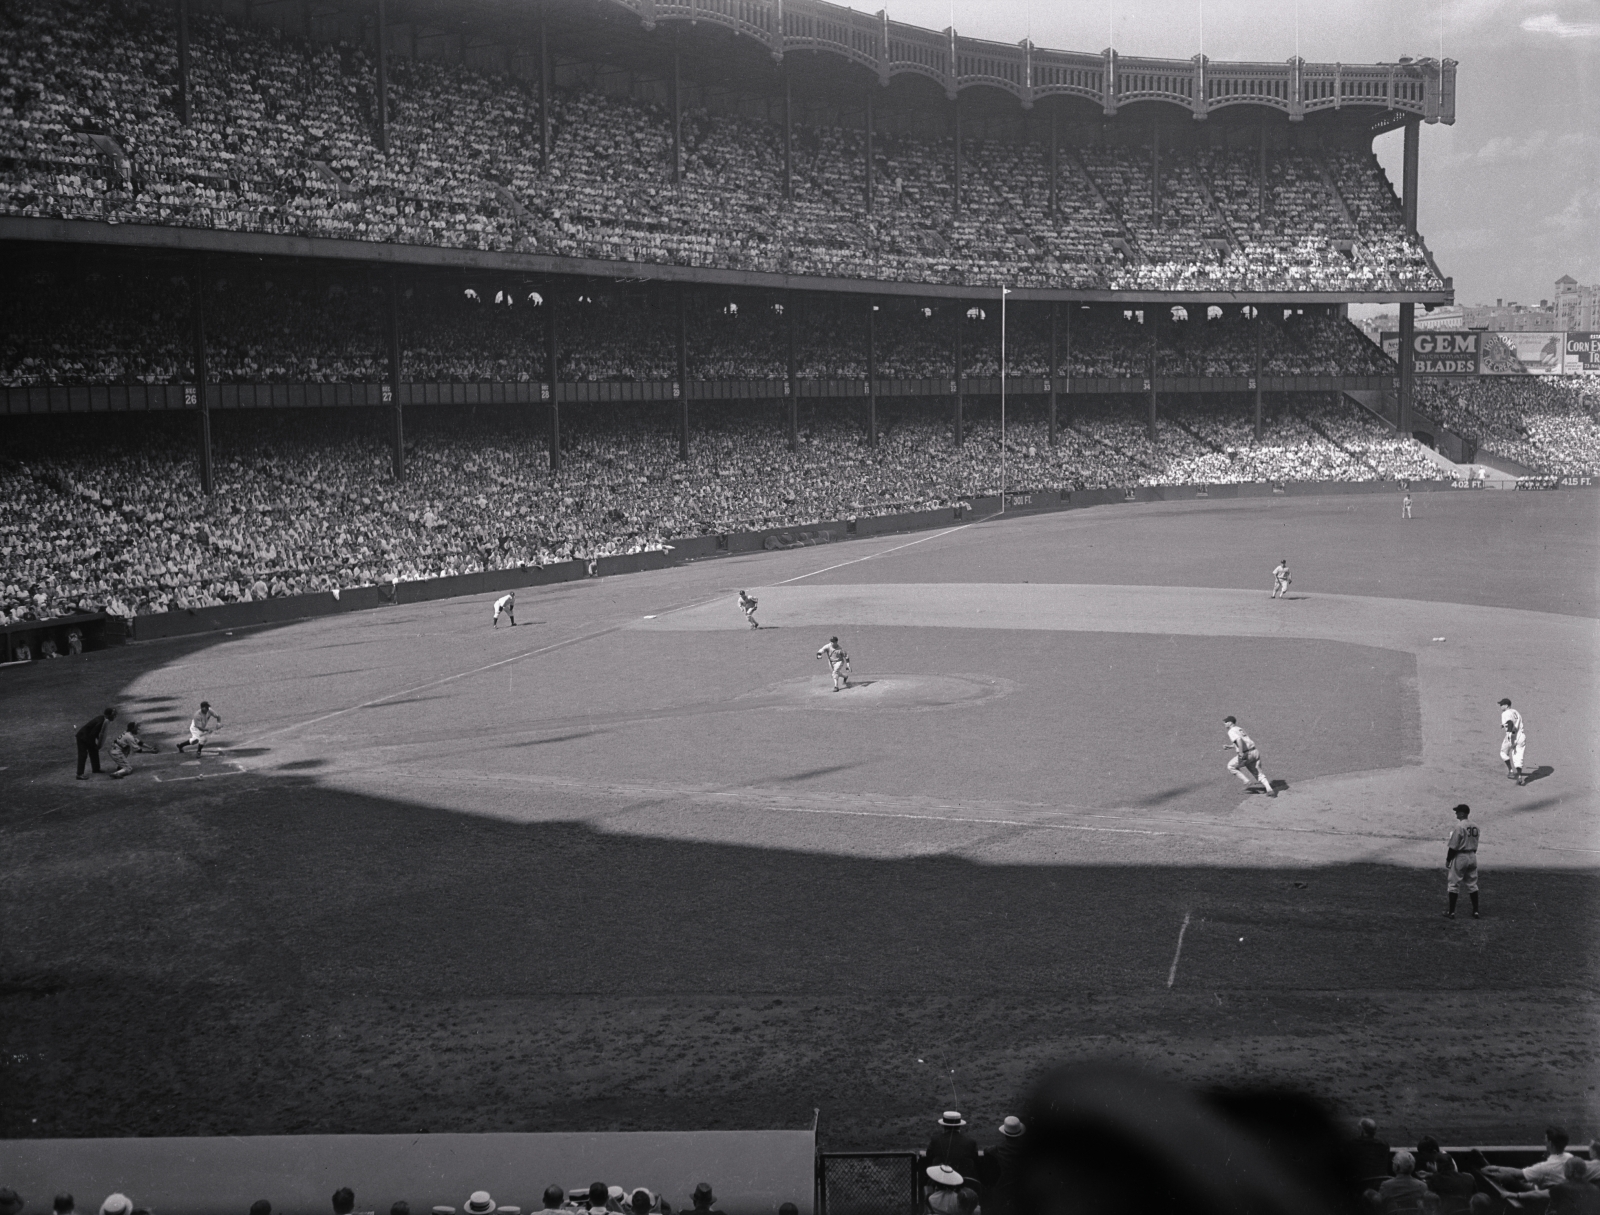 Old Yankee Stadium and Mets' Old Stadium: NYC Baseball History